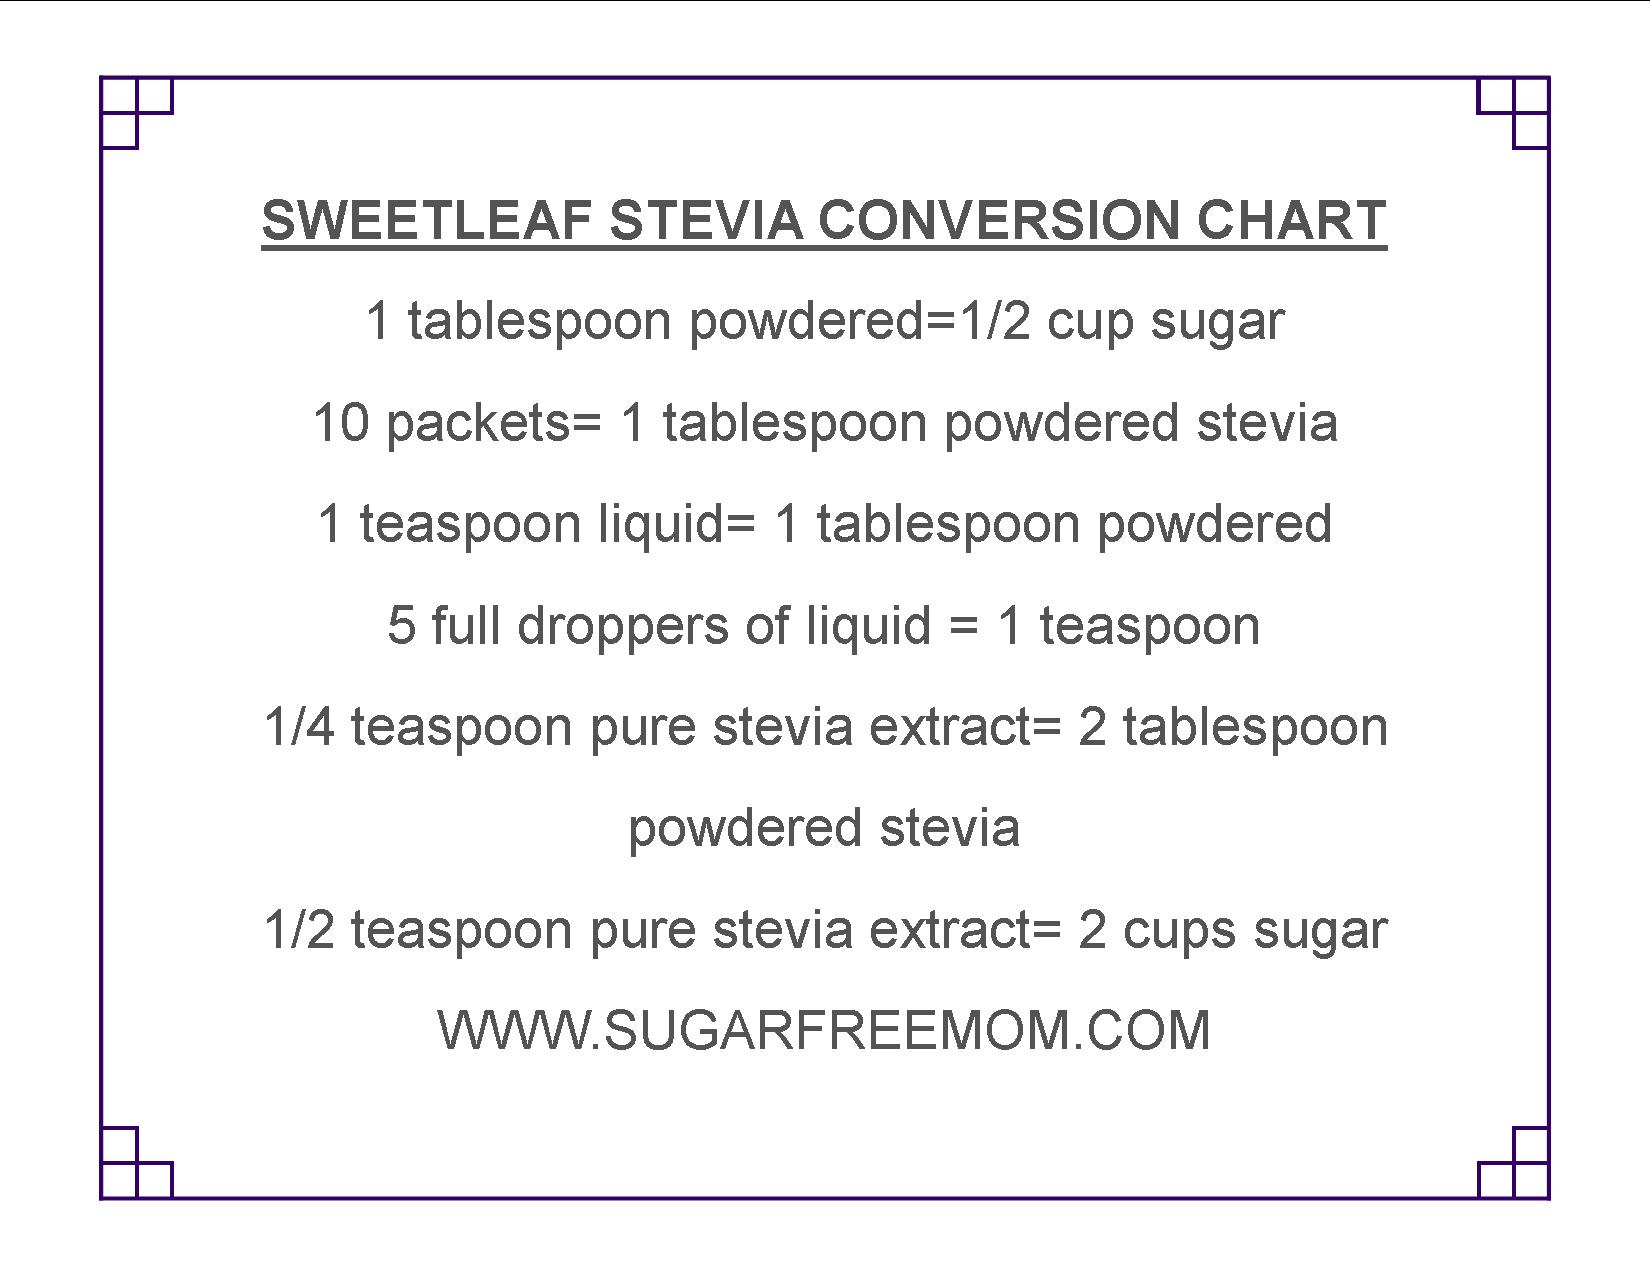 stevia-conversion-chart-sugar-free-mom-stevia-sugar-free-recipes-carbs